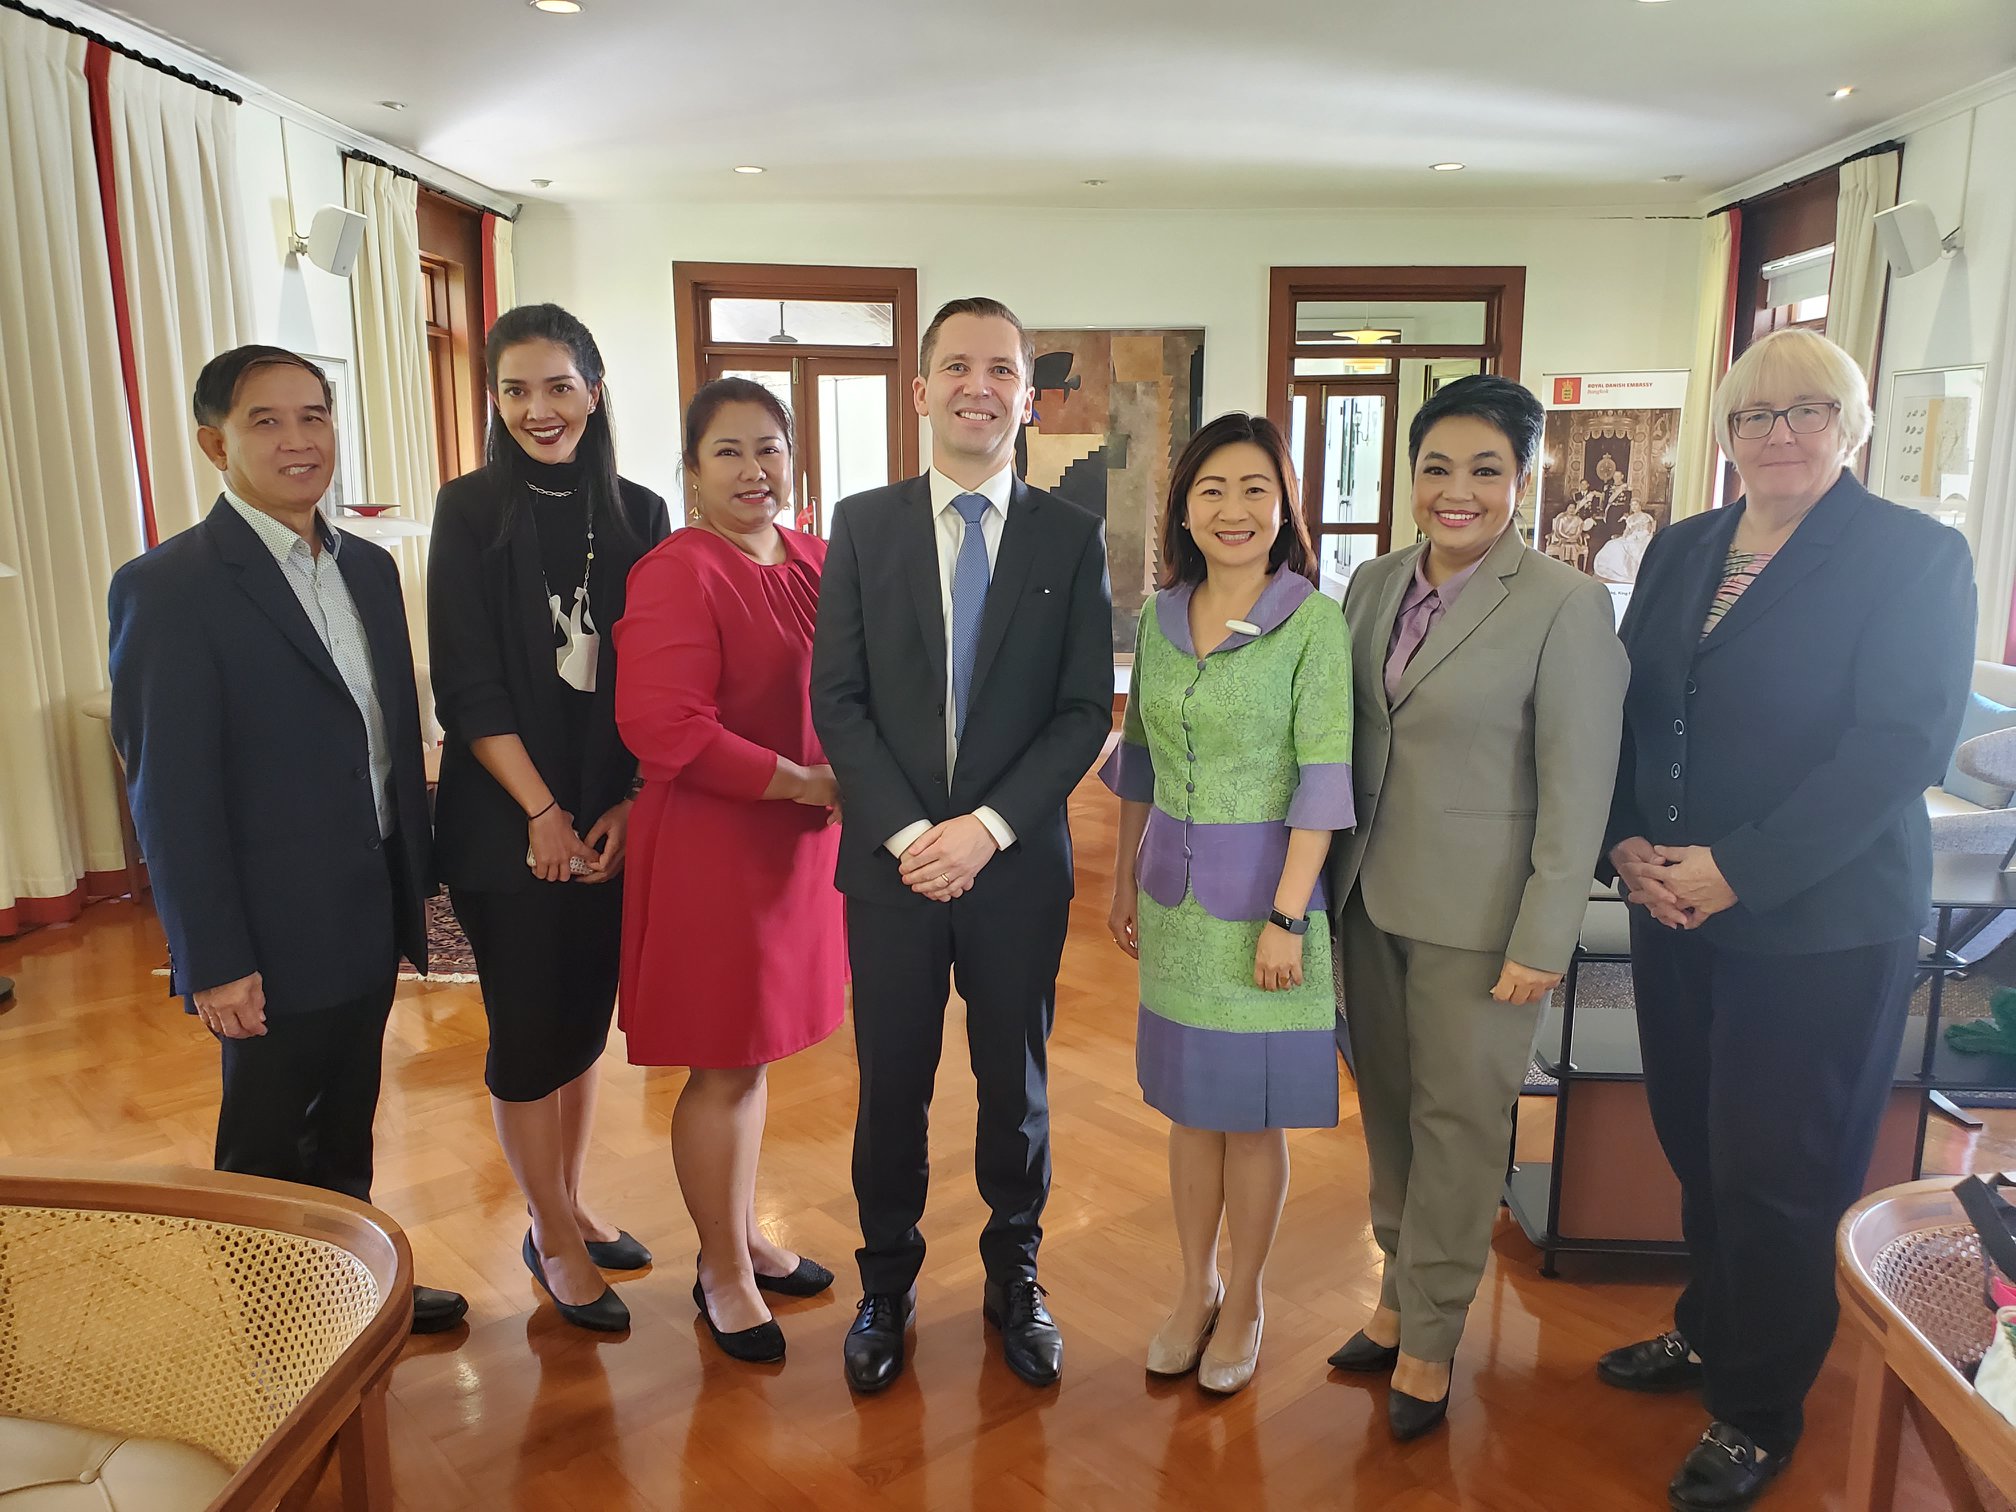 Ambassador Thorgaard and team visited Thailand's Department of Livestock Development